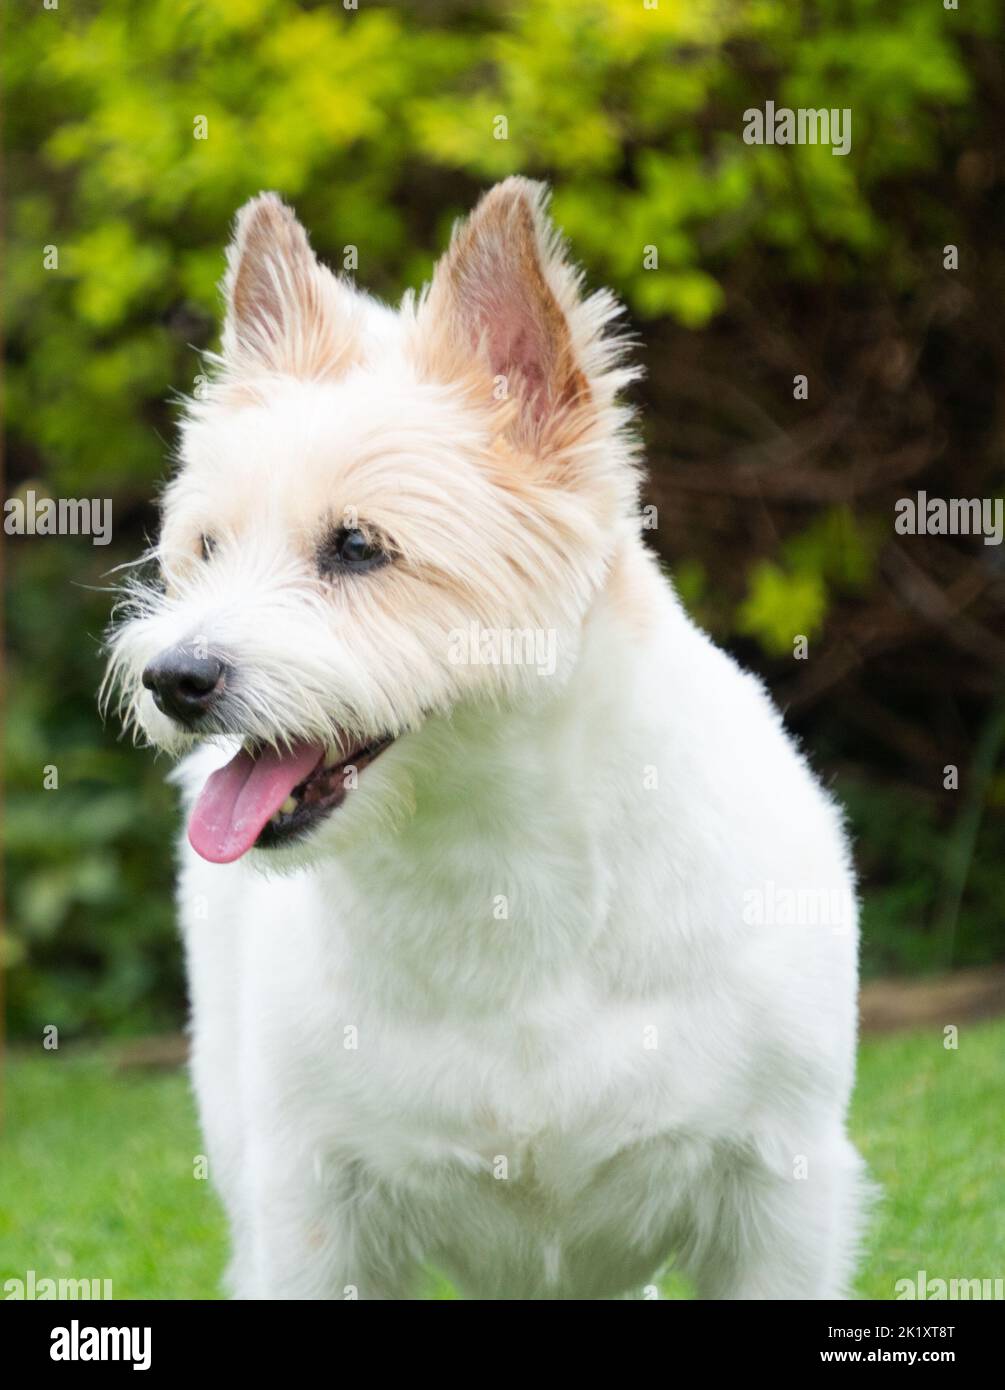 Westie dog in garden Stock Photo